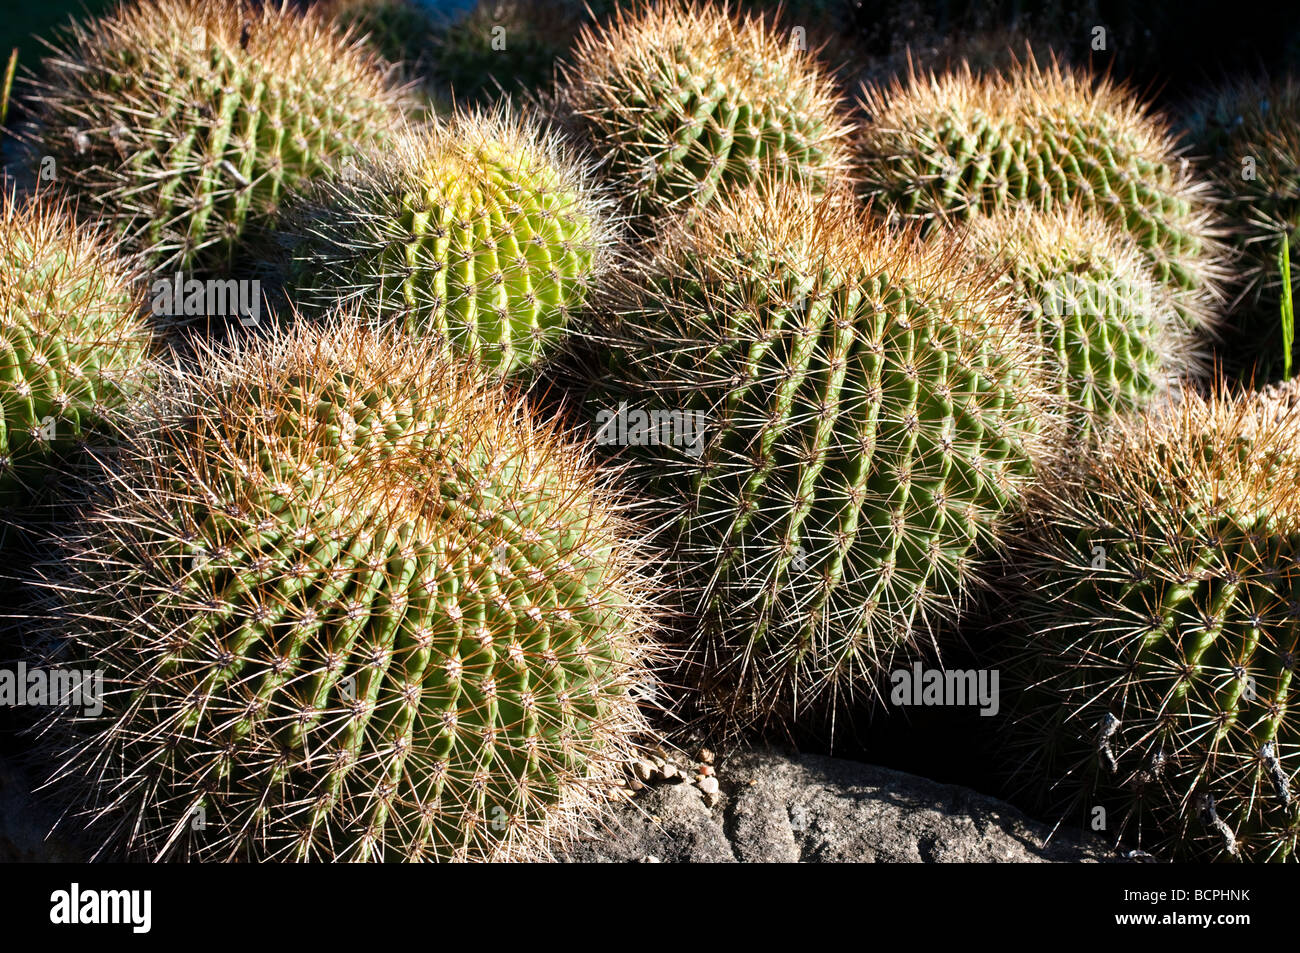 Kaktus Soehrensia Formosa Ursprungsland Argentinien Royal Botanic Gardens Sydney NSW Australia Stockfoto